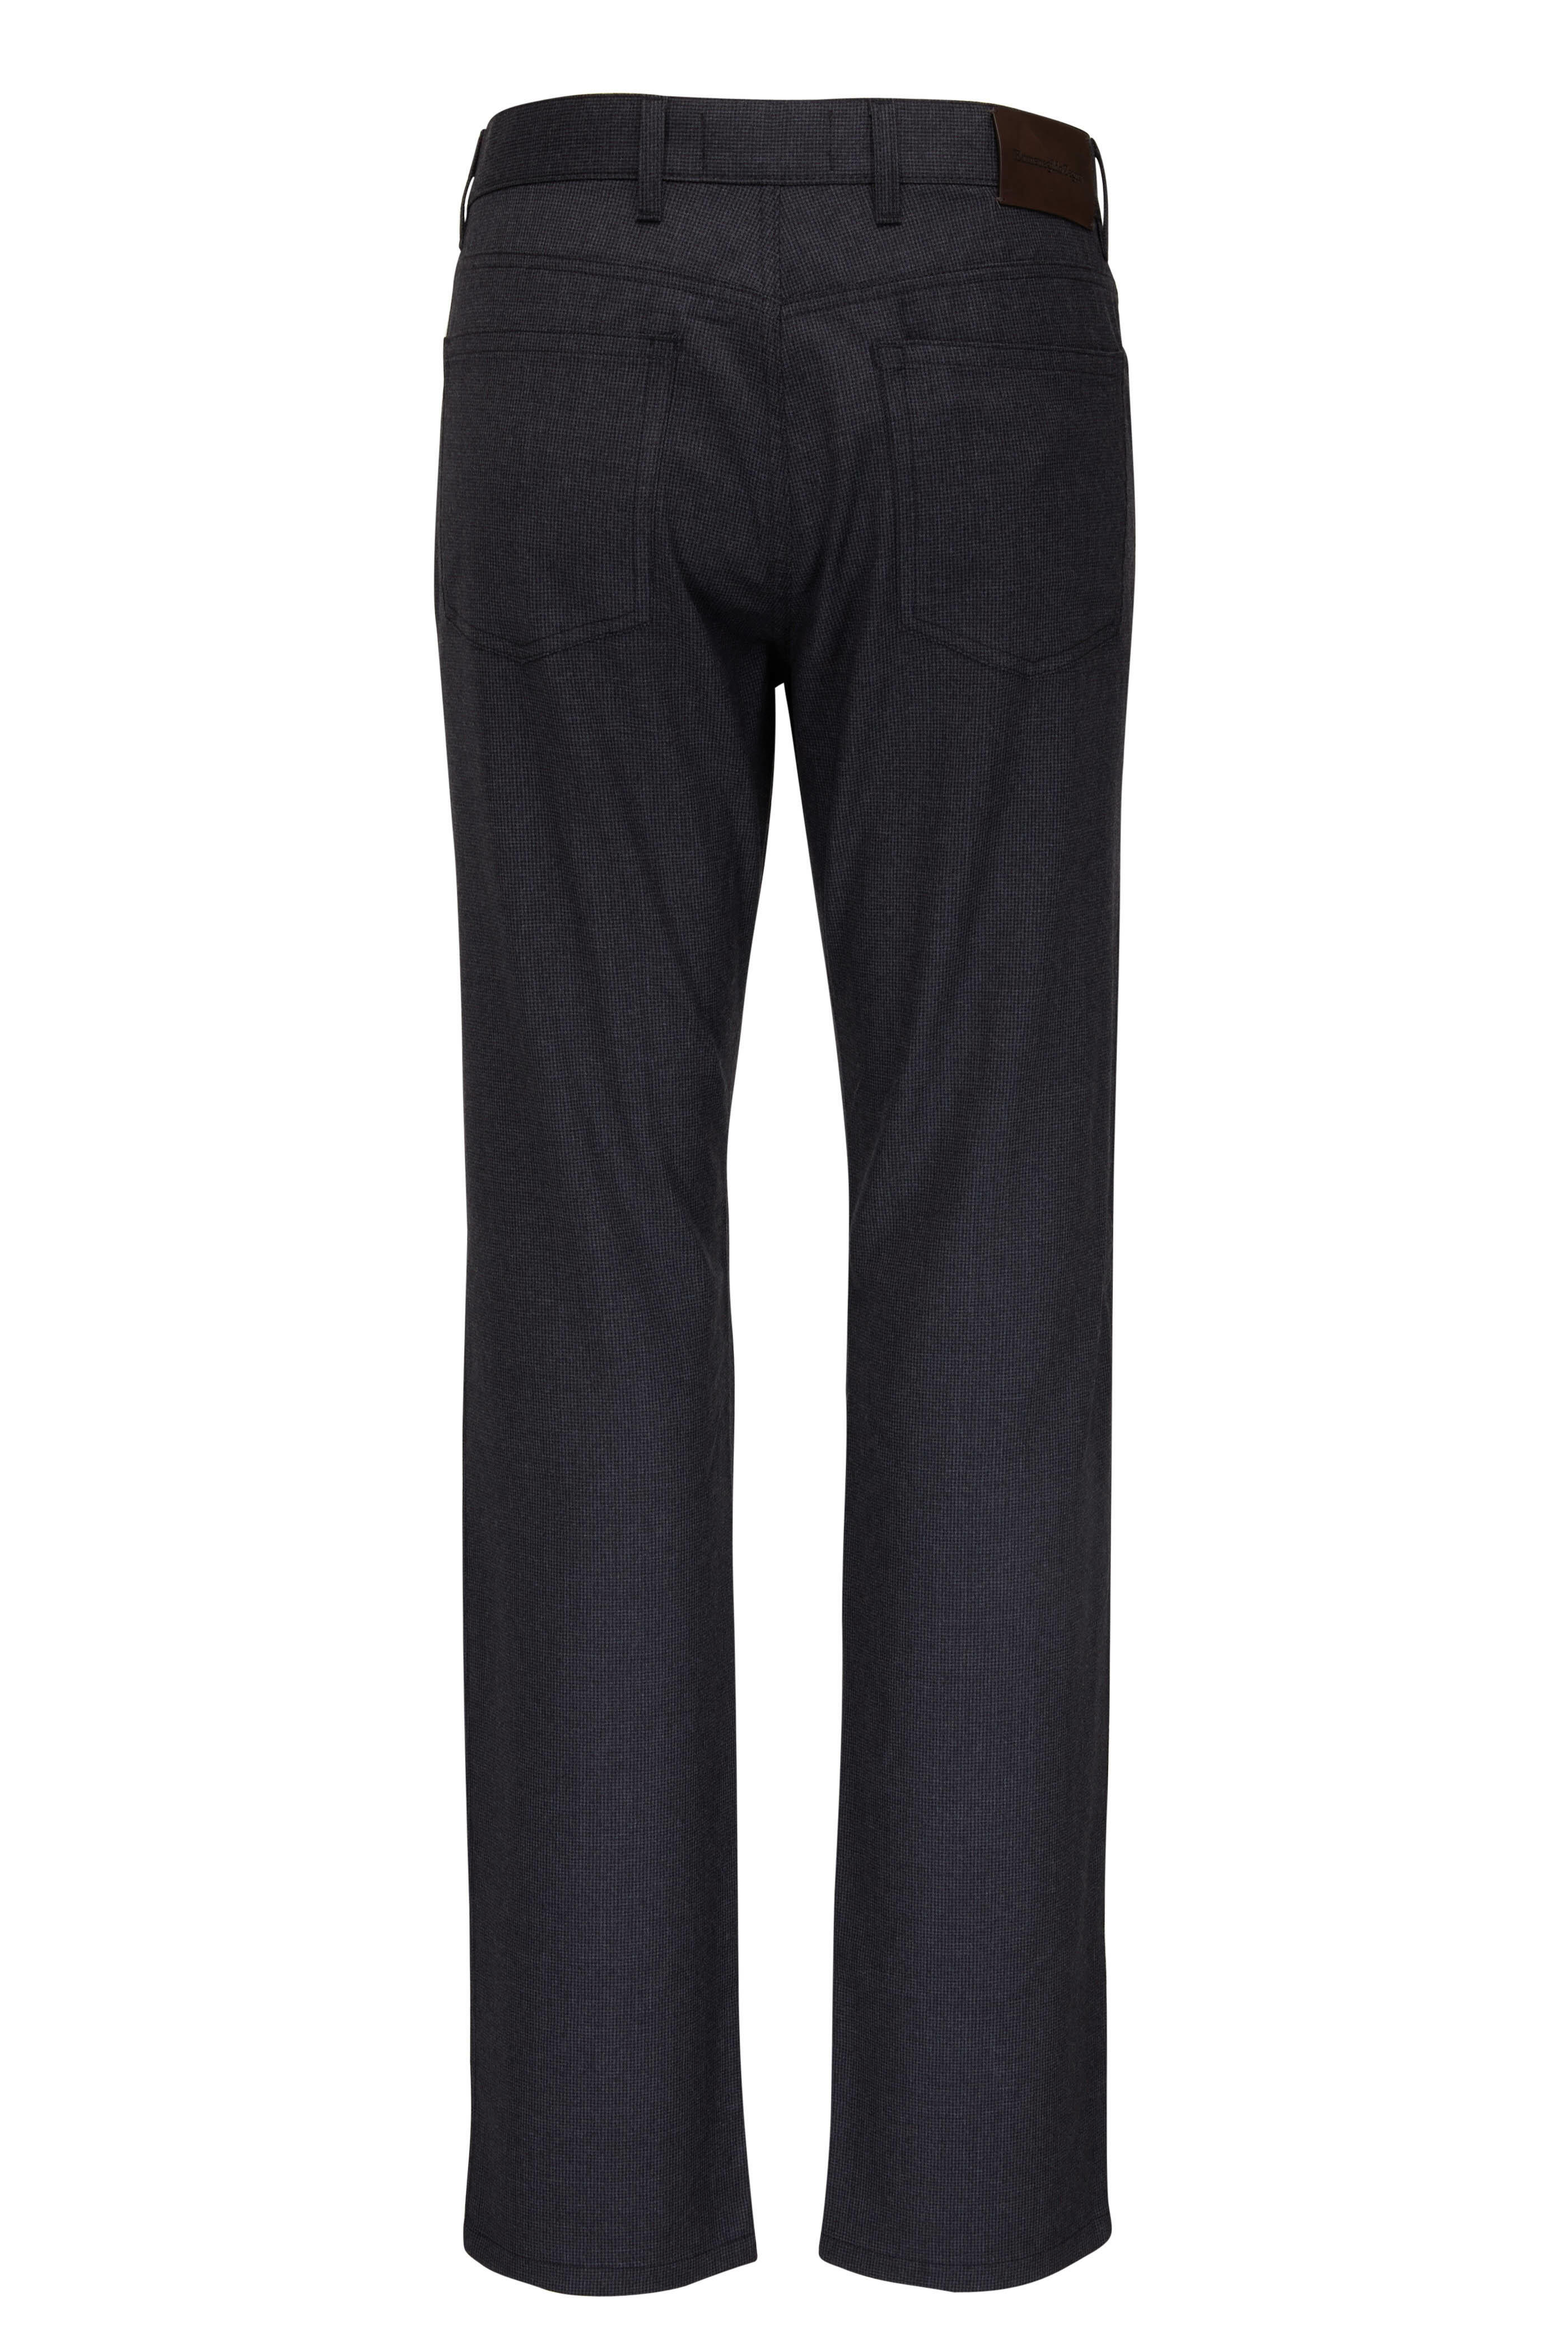 Zegna - Charcoal Mini Check Wool Five Pocket Pant